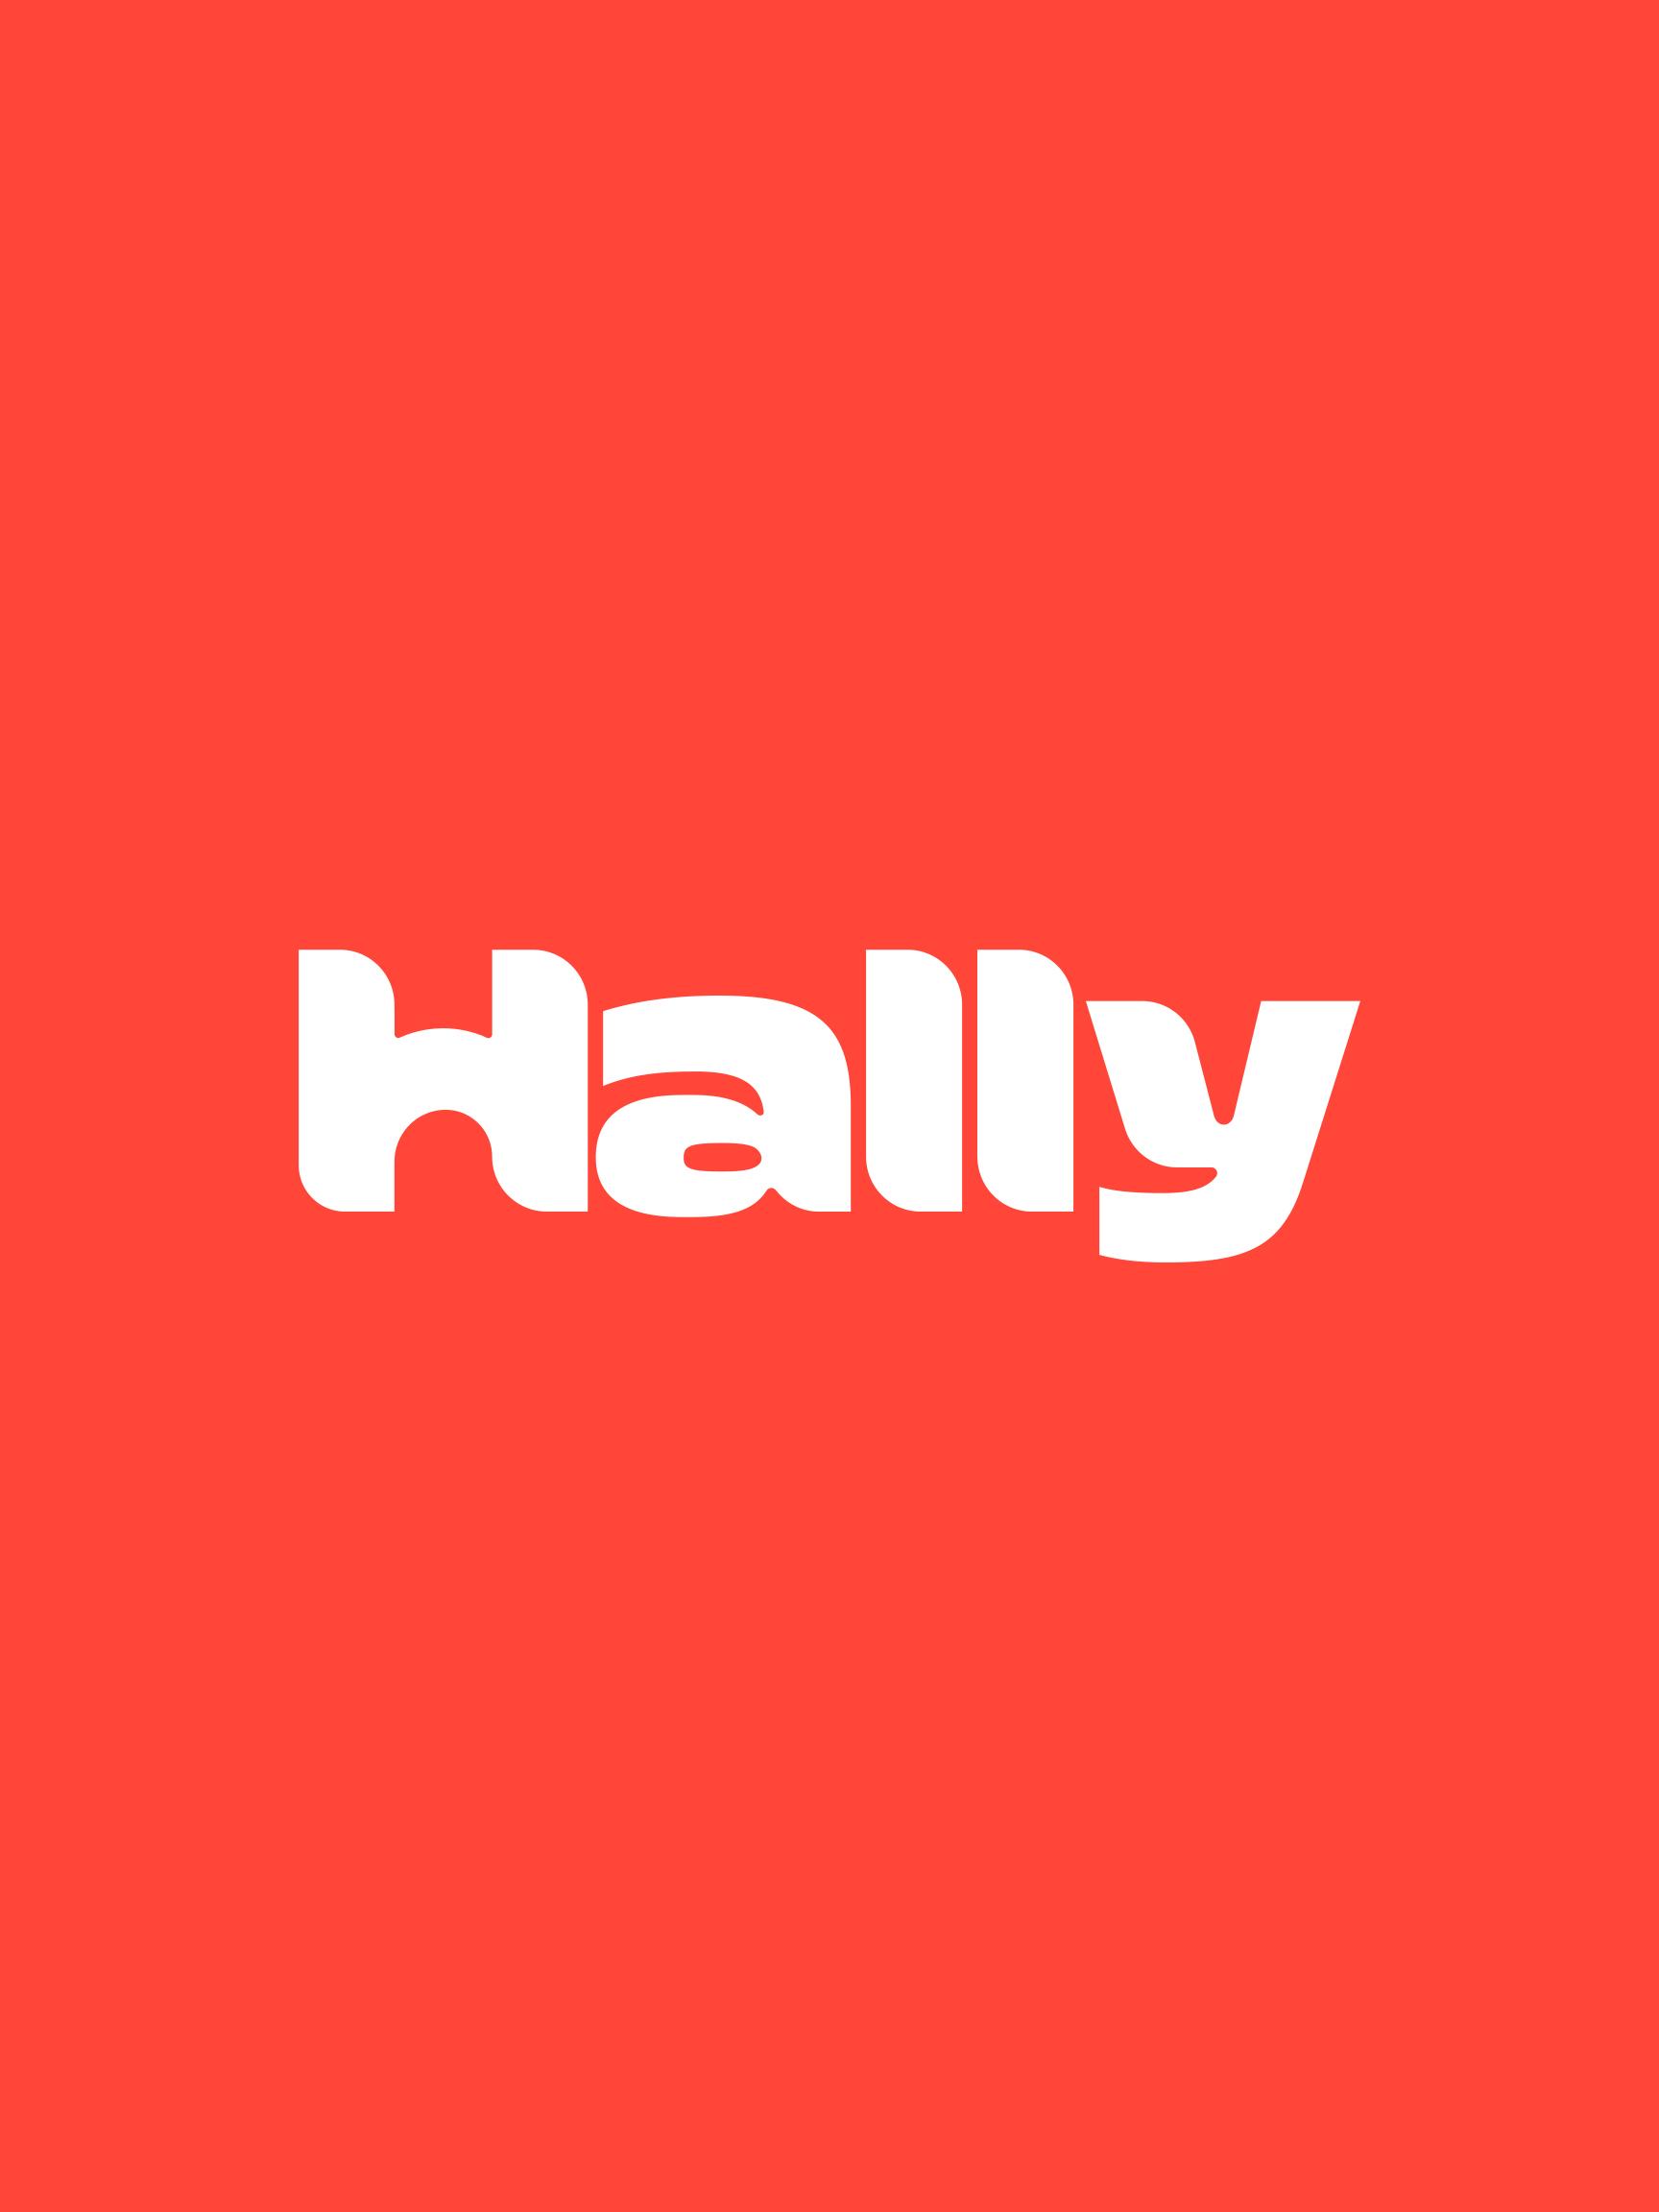 hally logo 2x